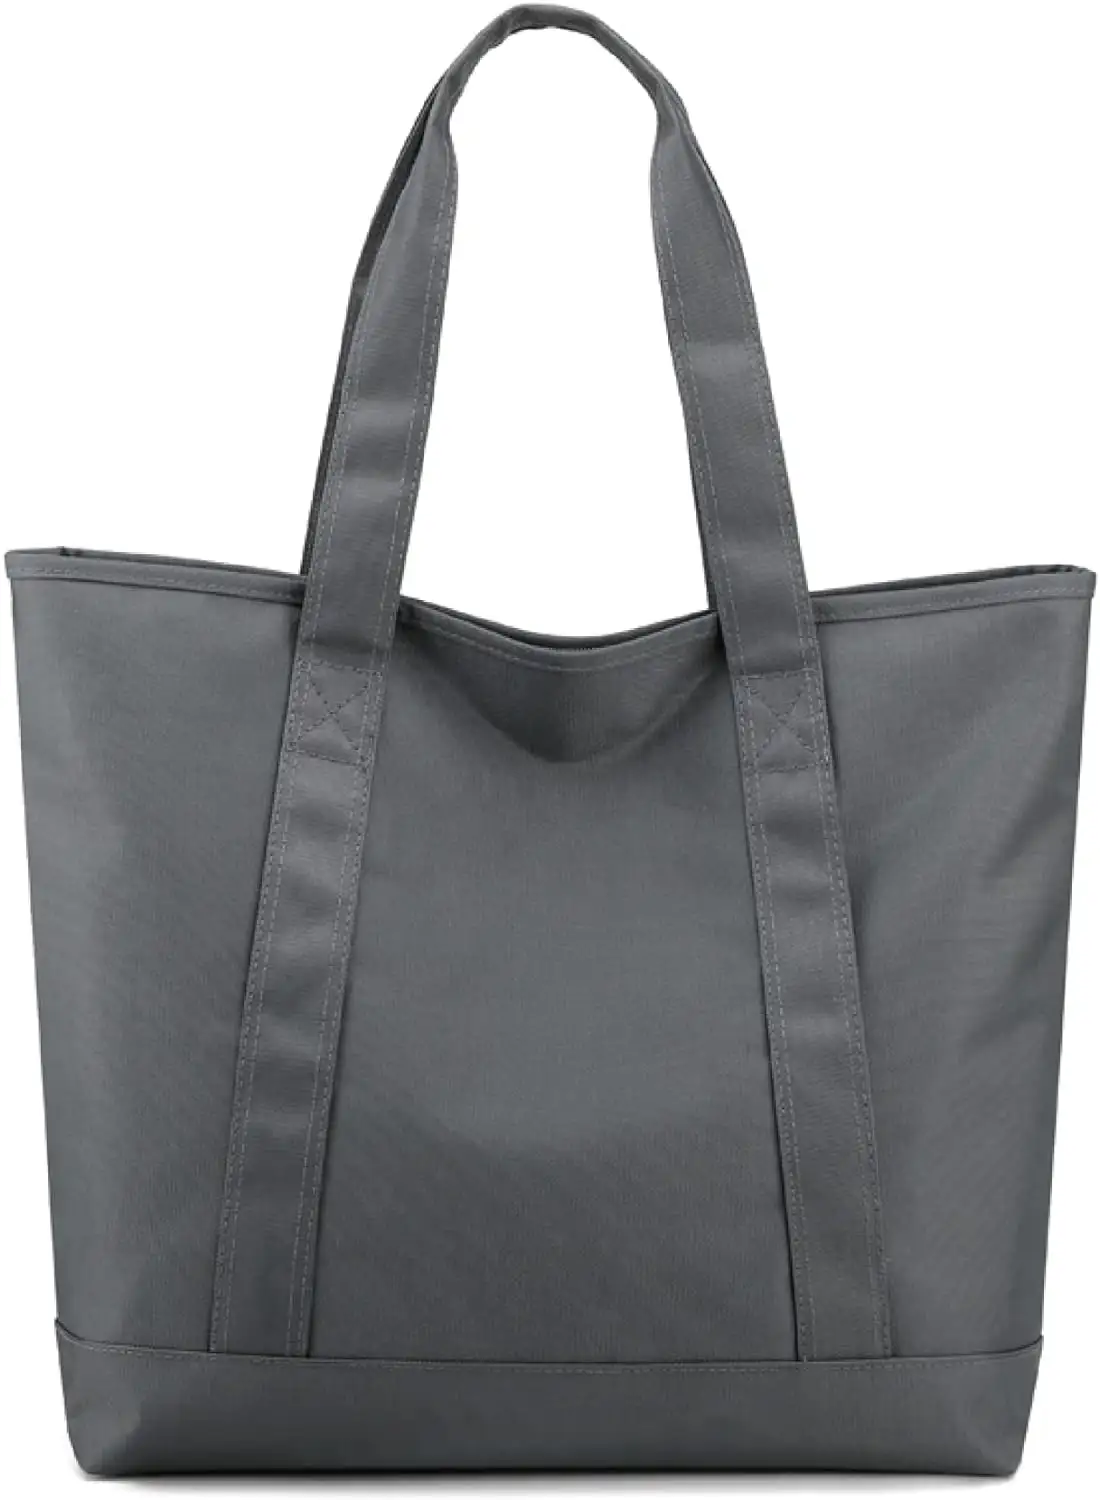 Customized Fashion shoulder ladies handbag tote bag polyester lifestyle bags